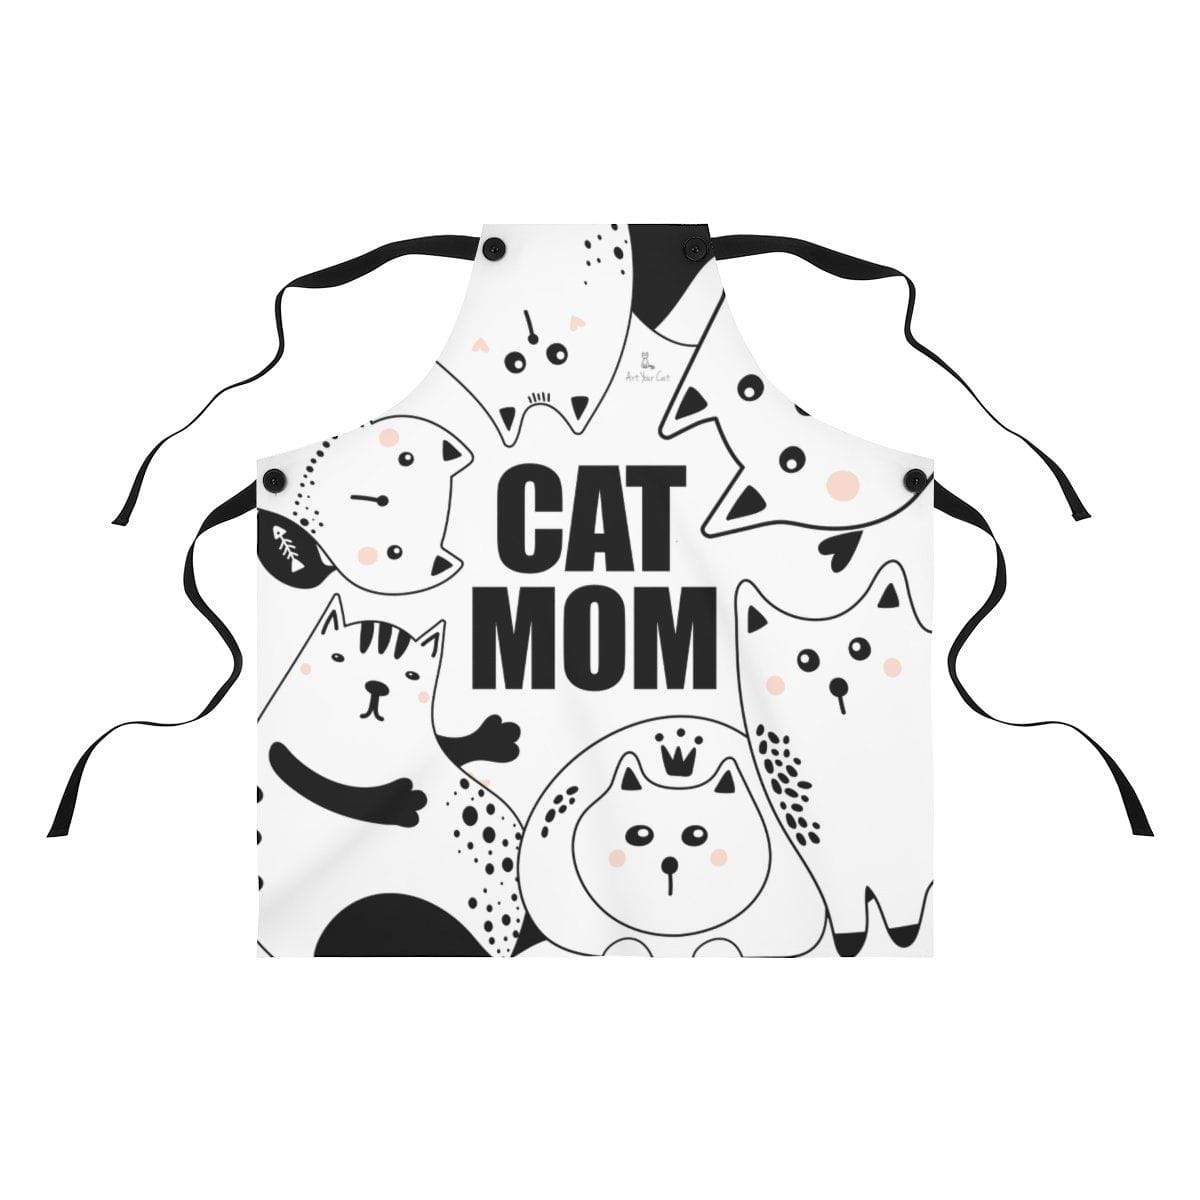 The Cat Mom - Baking Apron